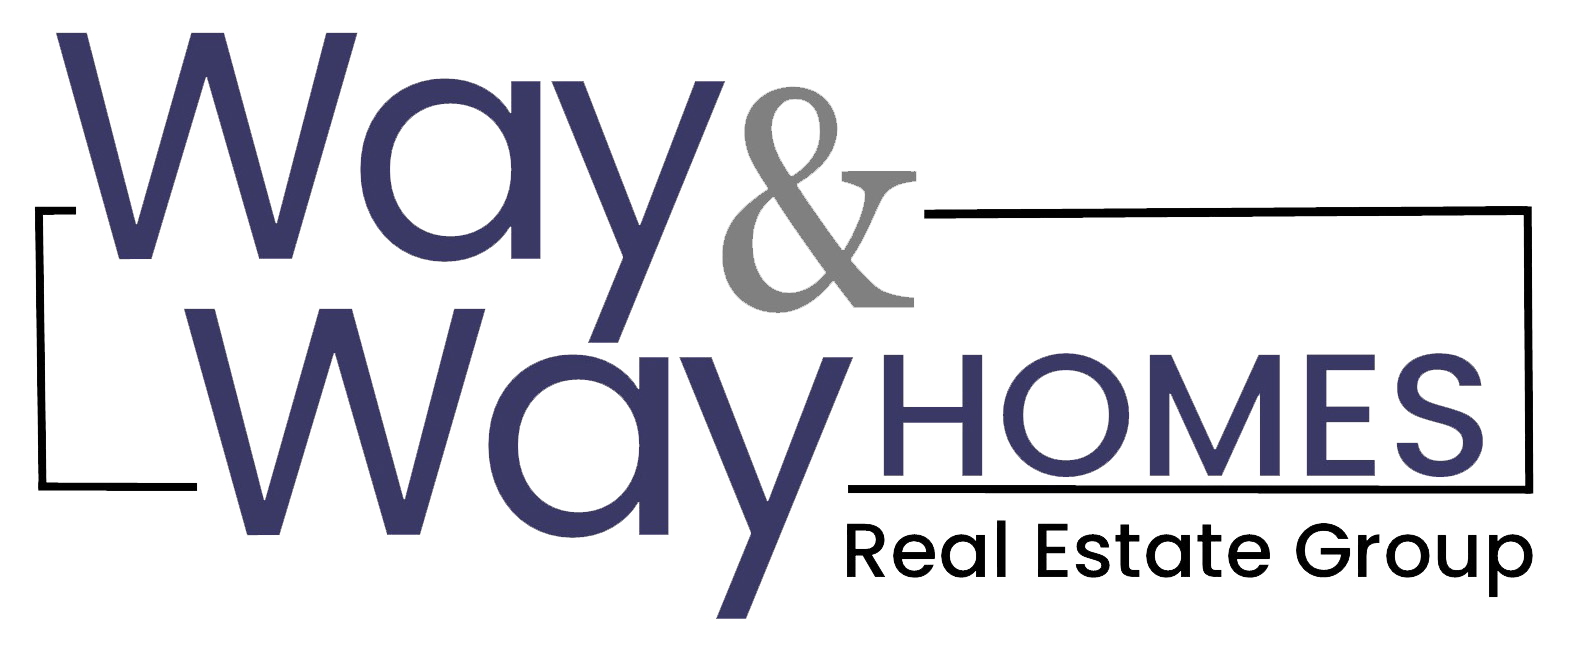 Way & Way Homes - Real Estate Professionals - Temecula, CA